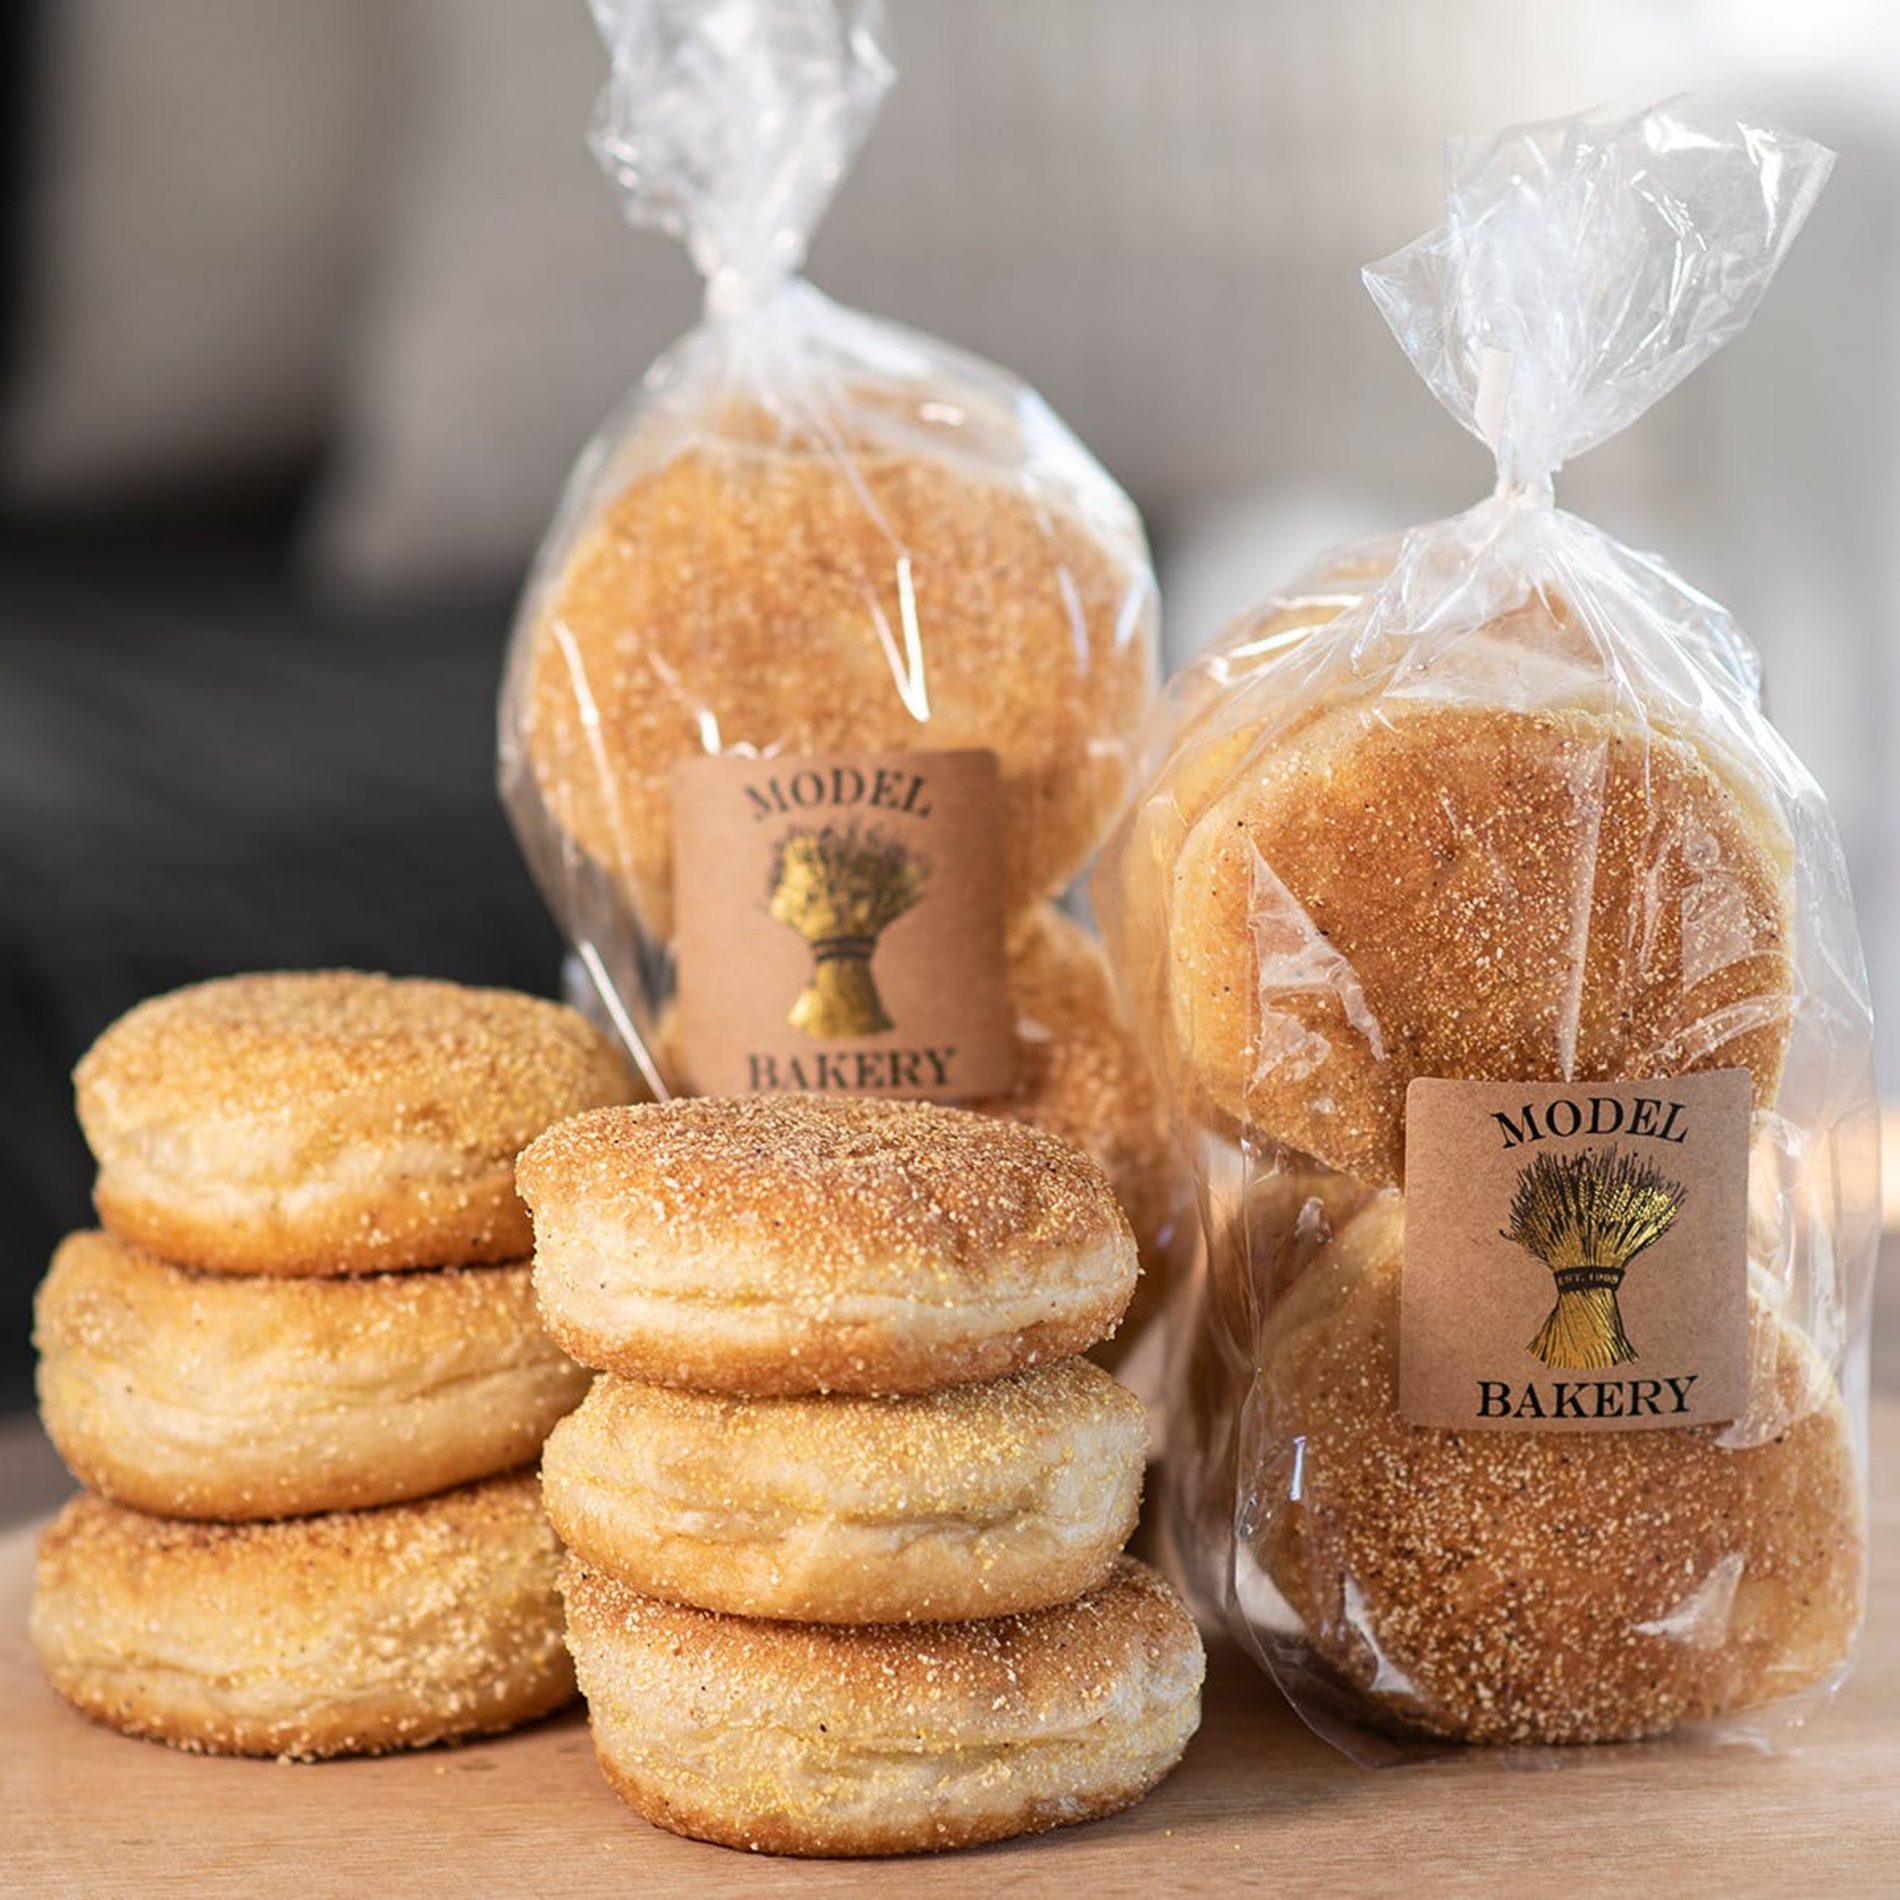 model bakery english muffins